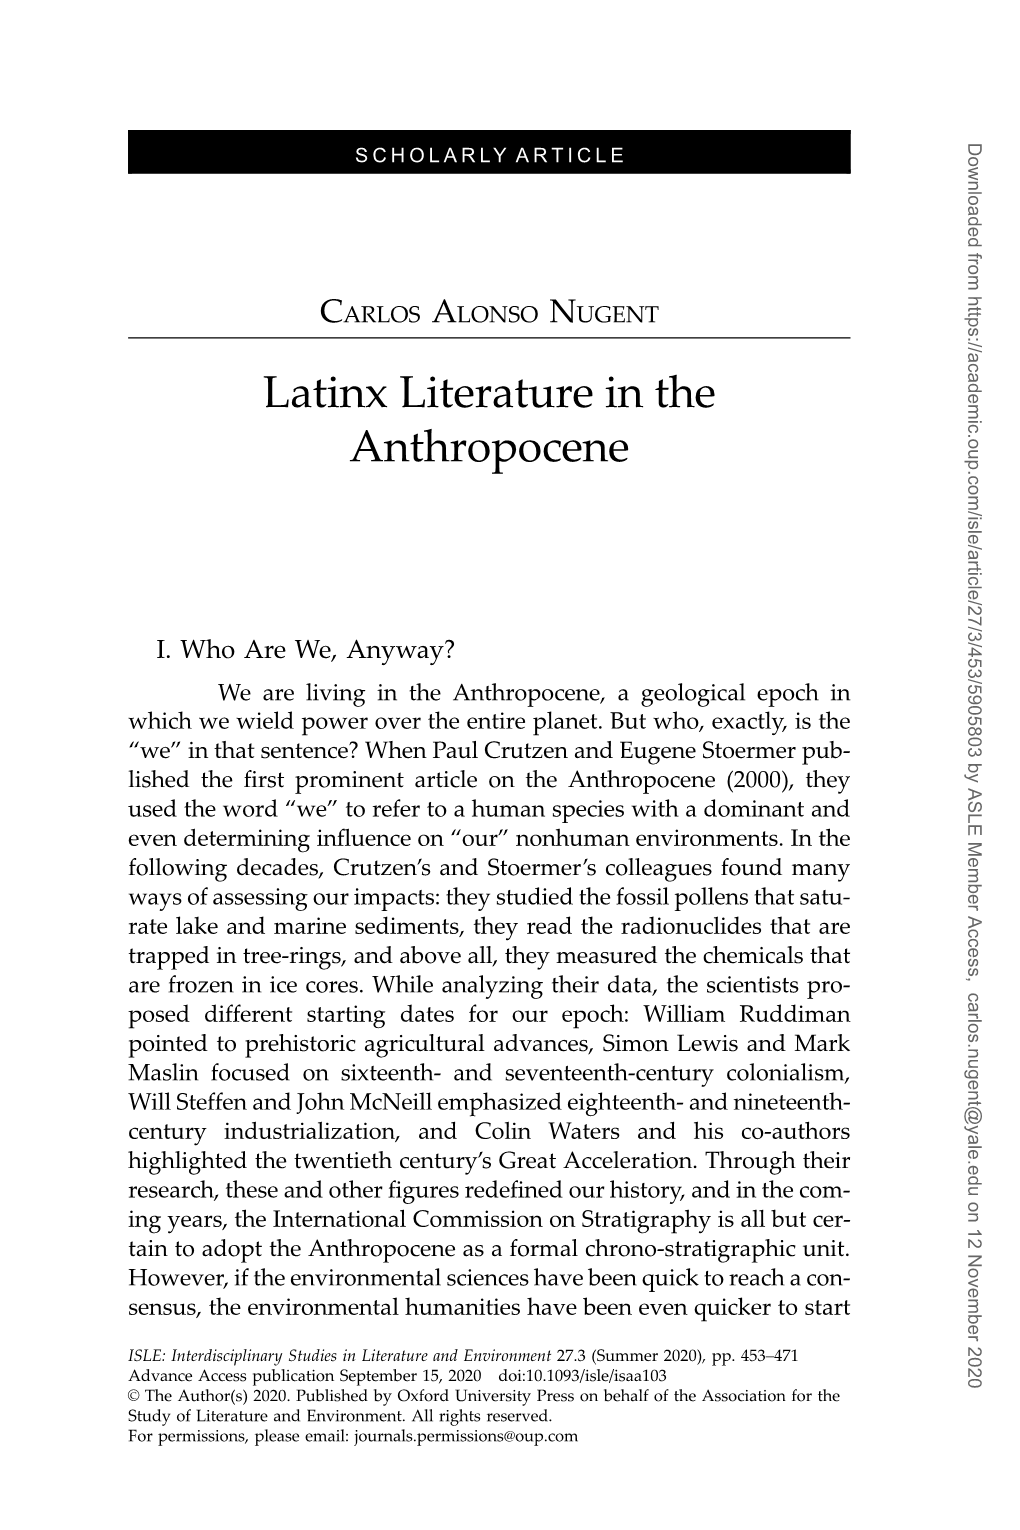 Latinx Literature in the Anthropocene